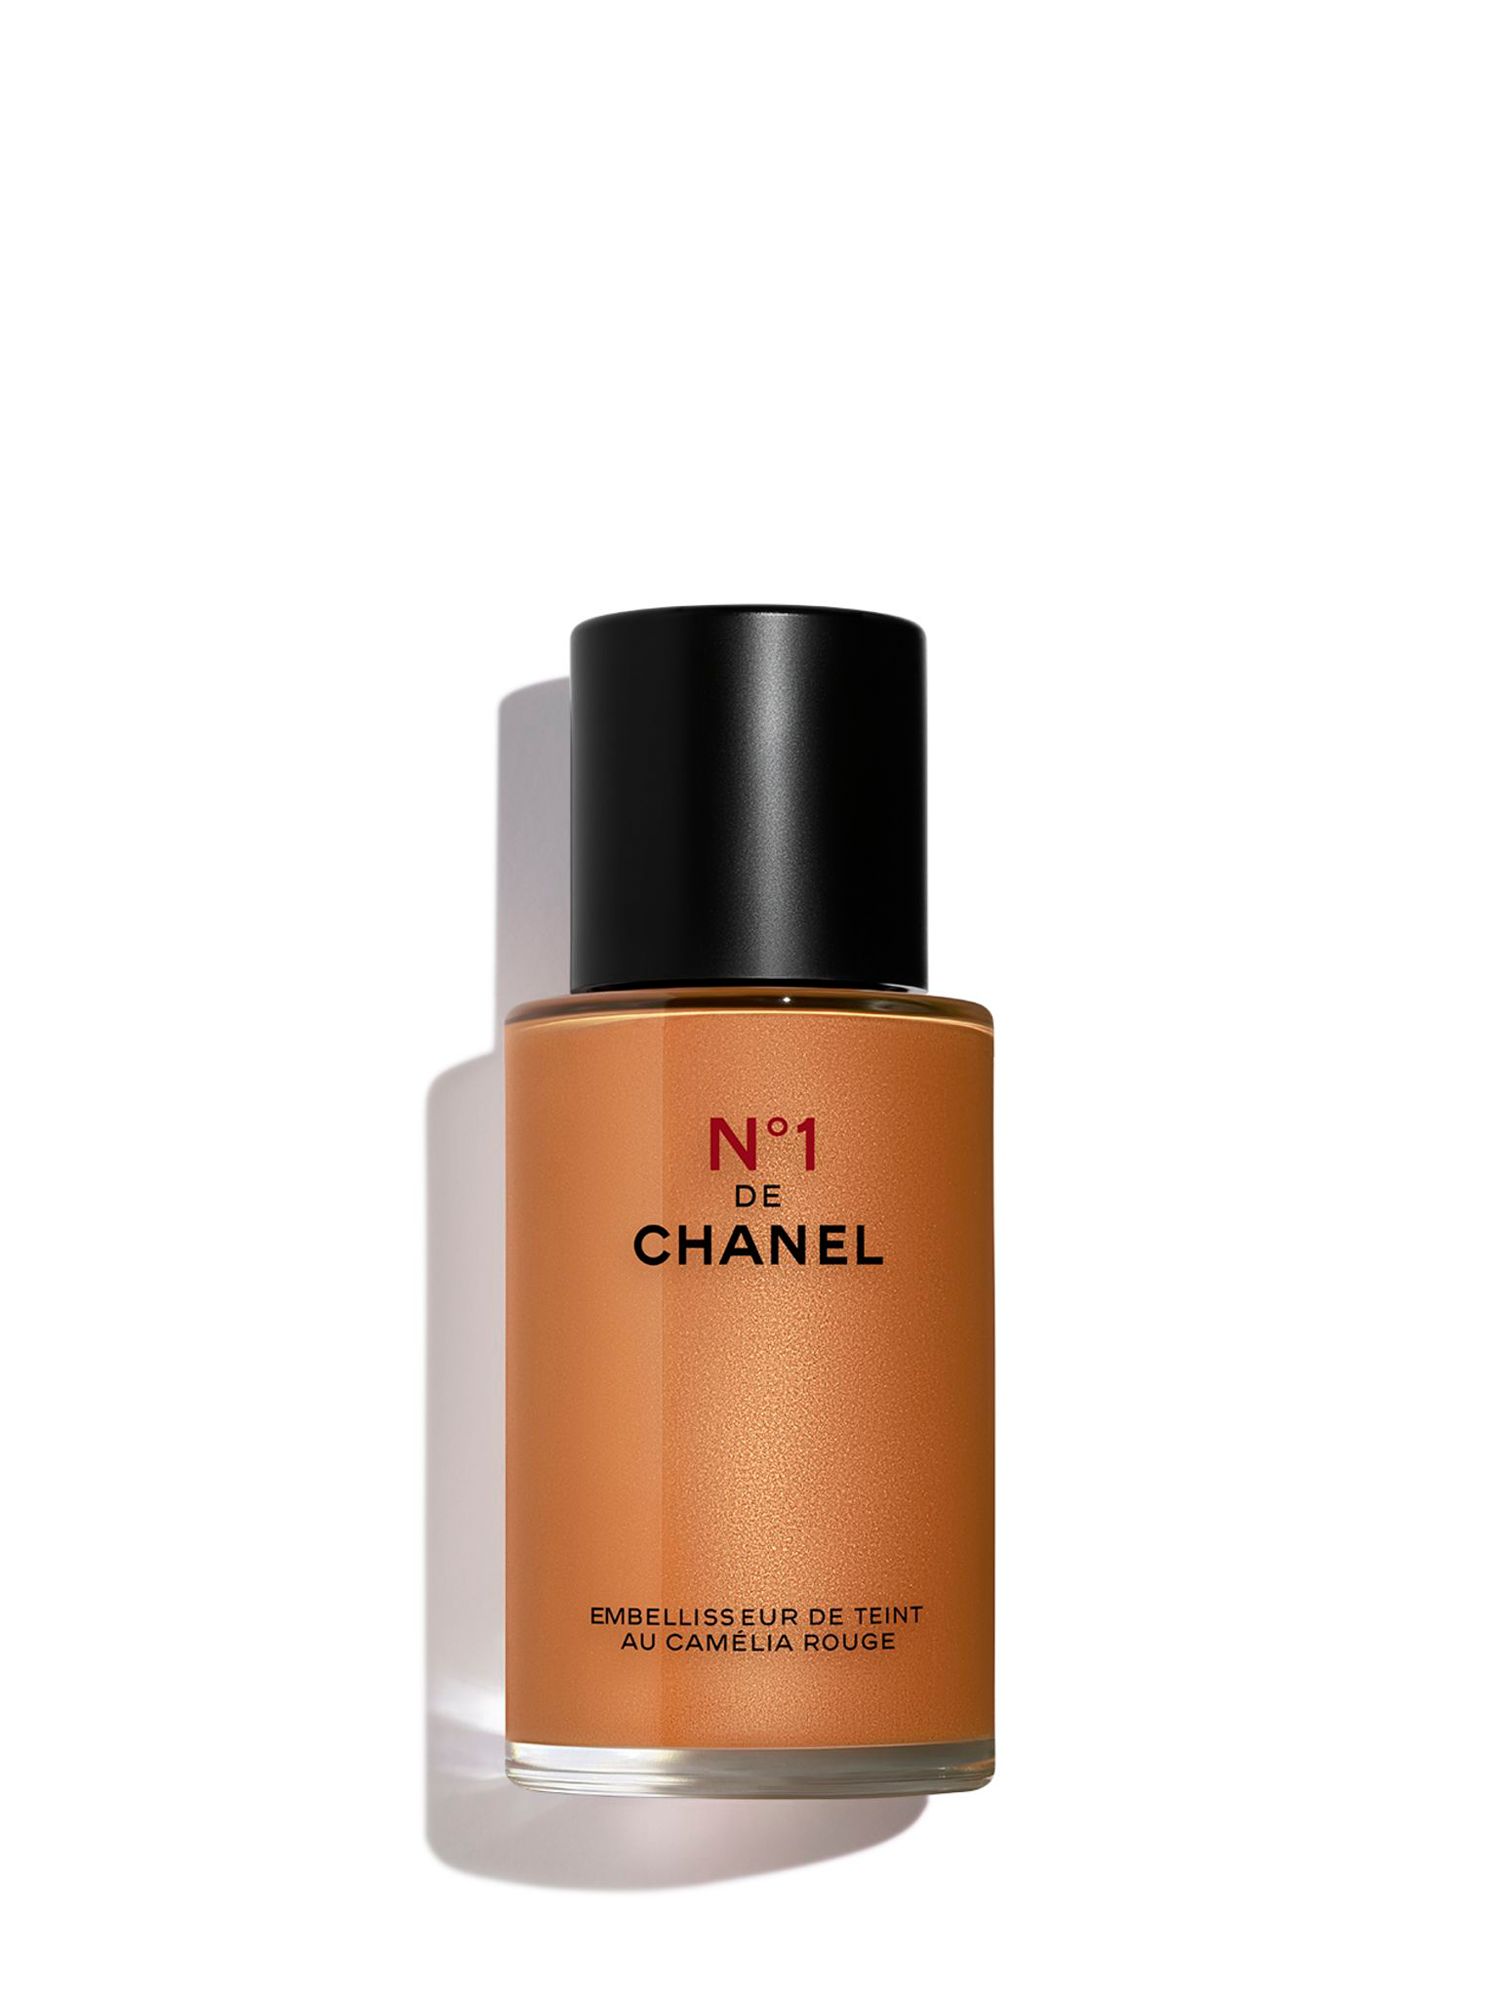 CHANEL N°1 De CHANEL Skin Enhancer Boosts Skin’s Radiance - Evens - Perfects, Medium Coral 1